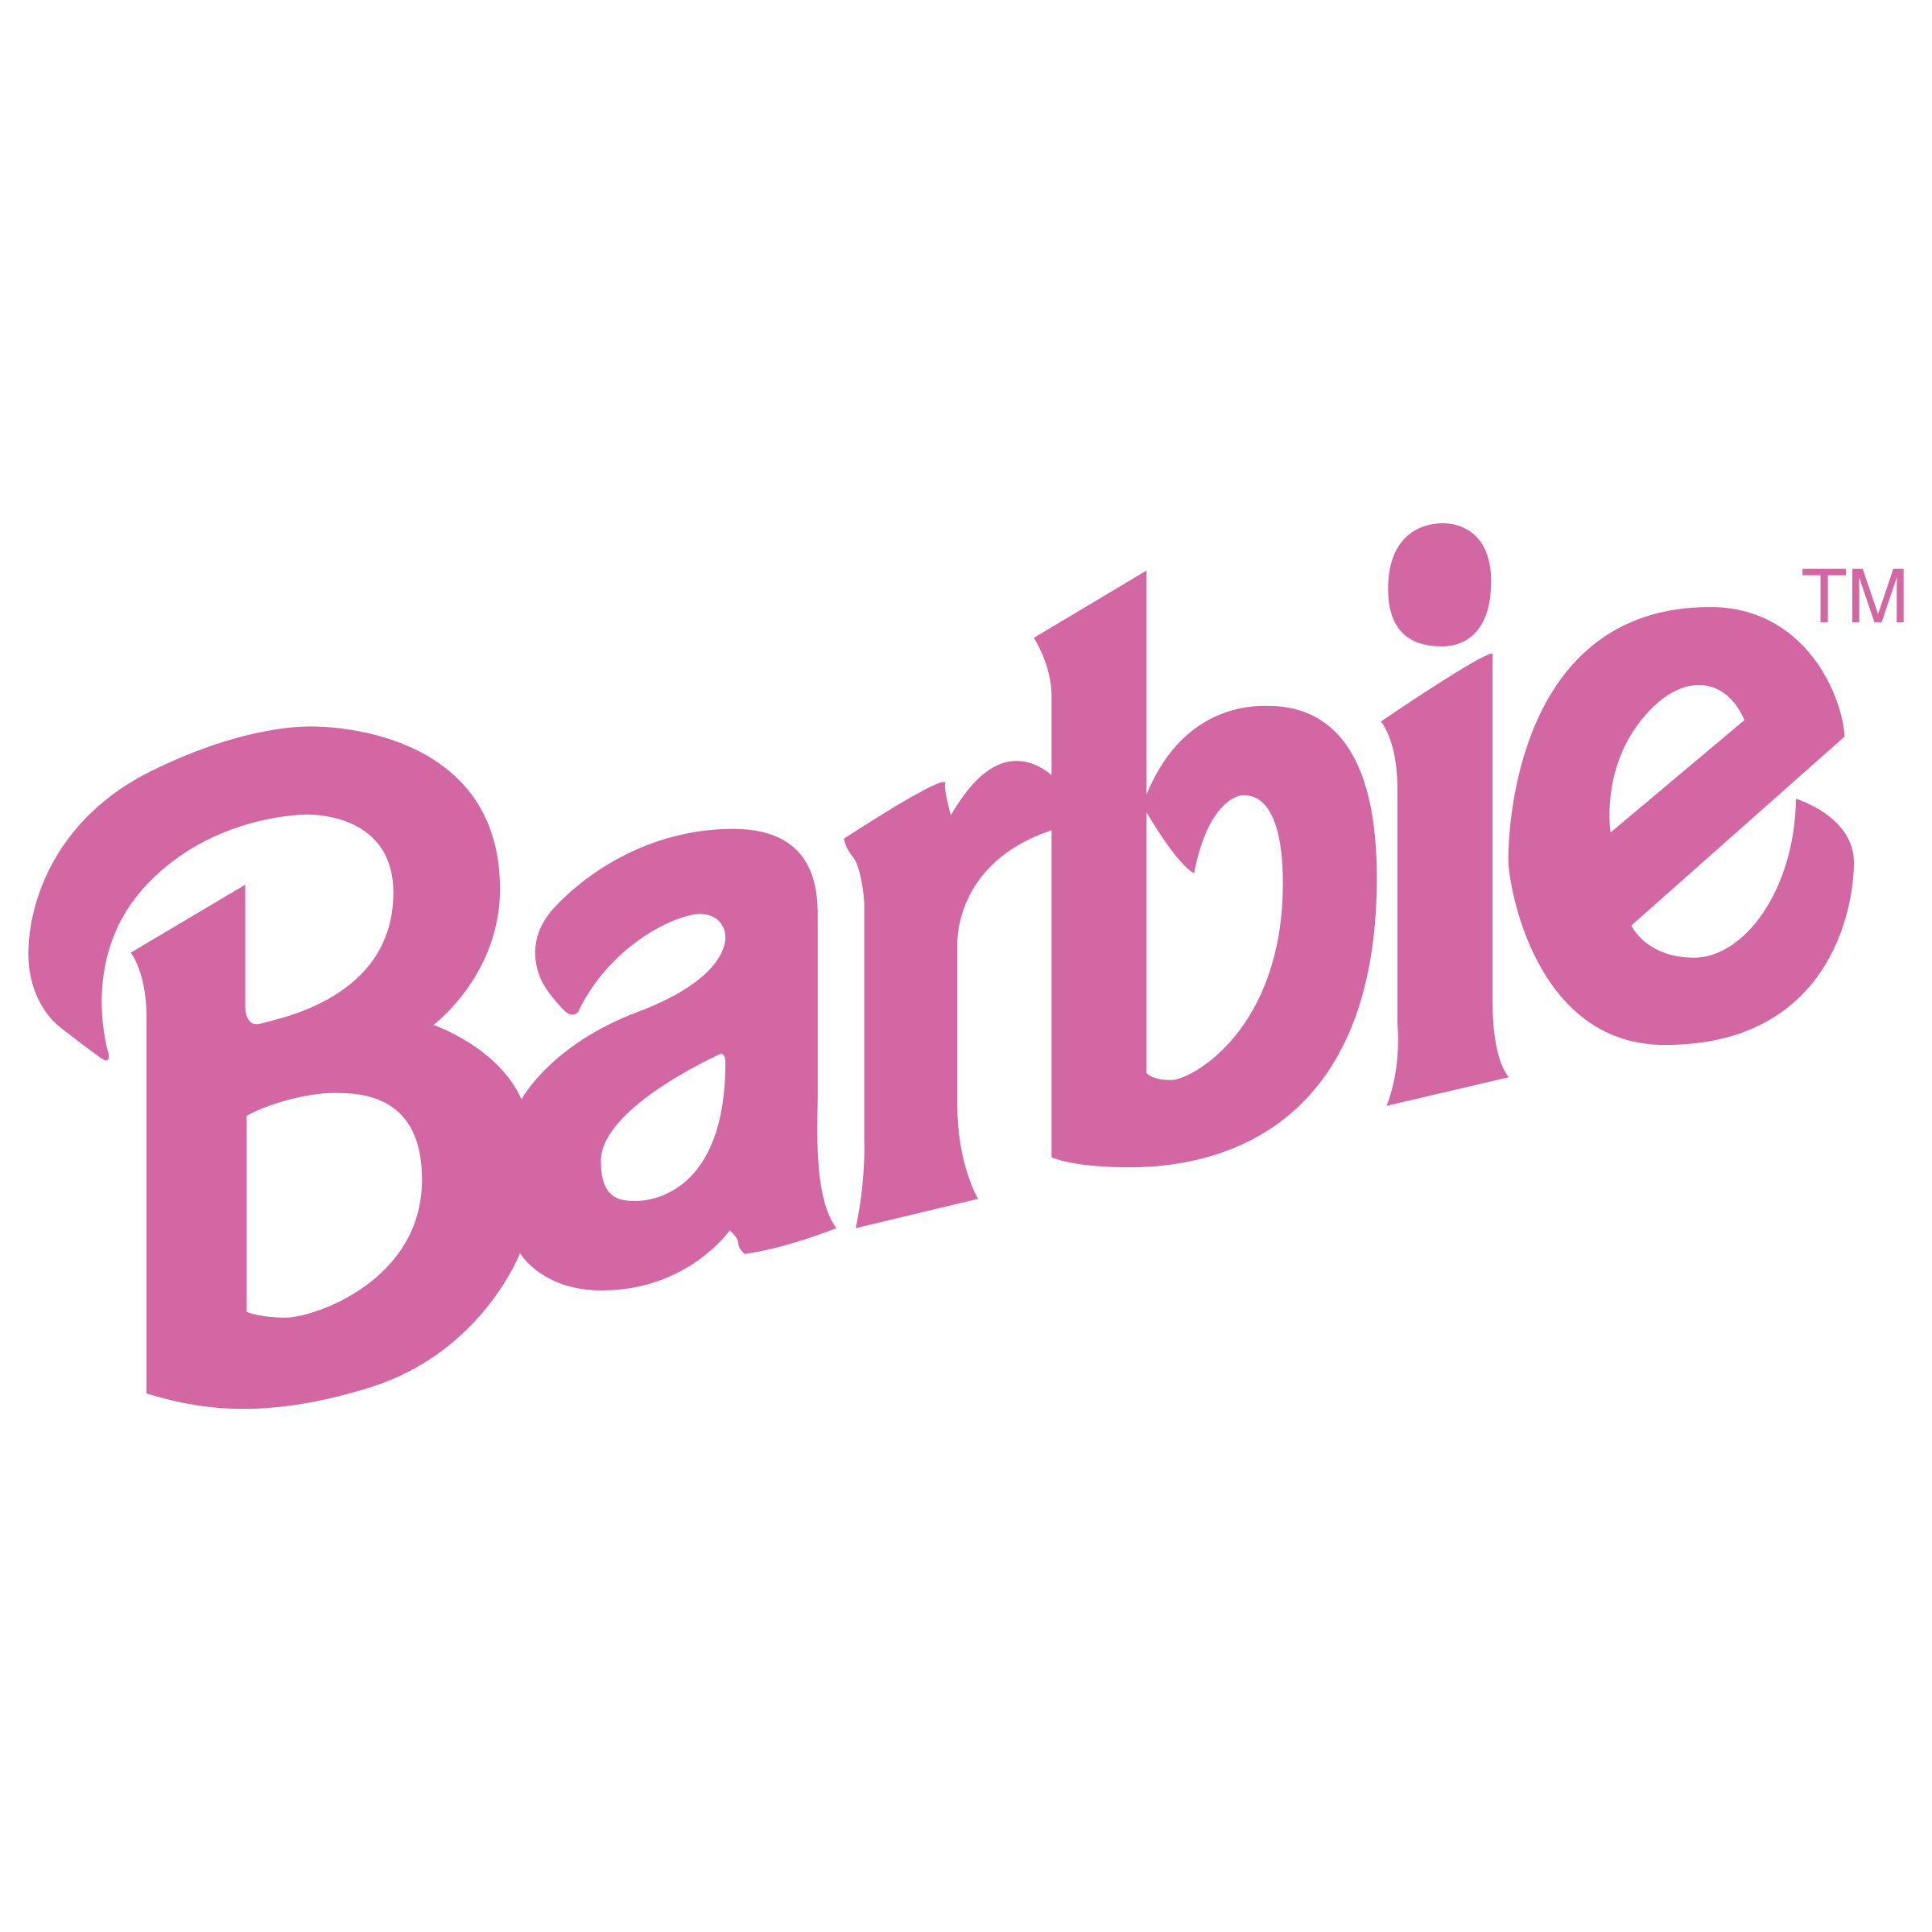 Barbie Logo - Barbie Logo PNG Transparent & SVG Vector - Freebie Supply